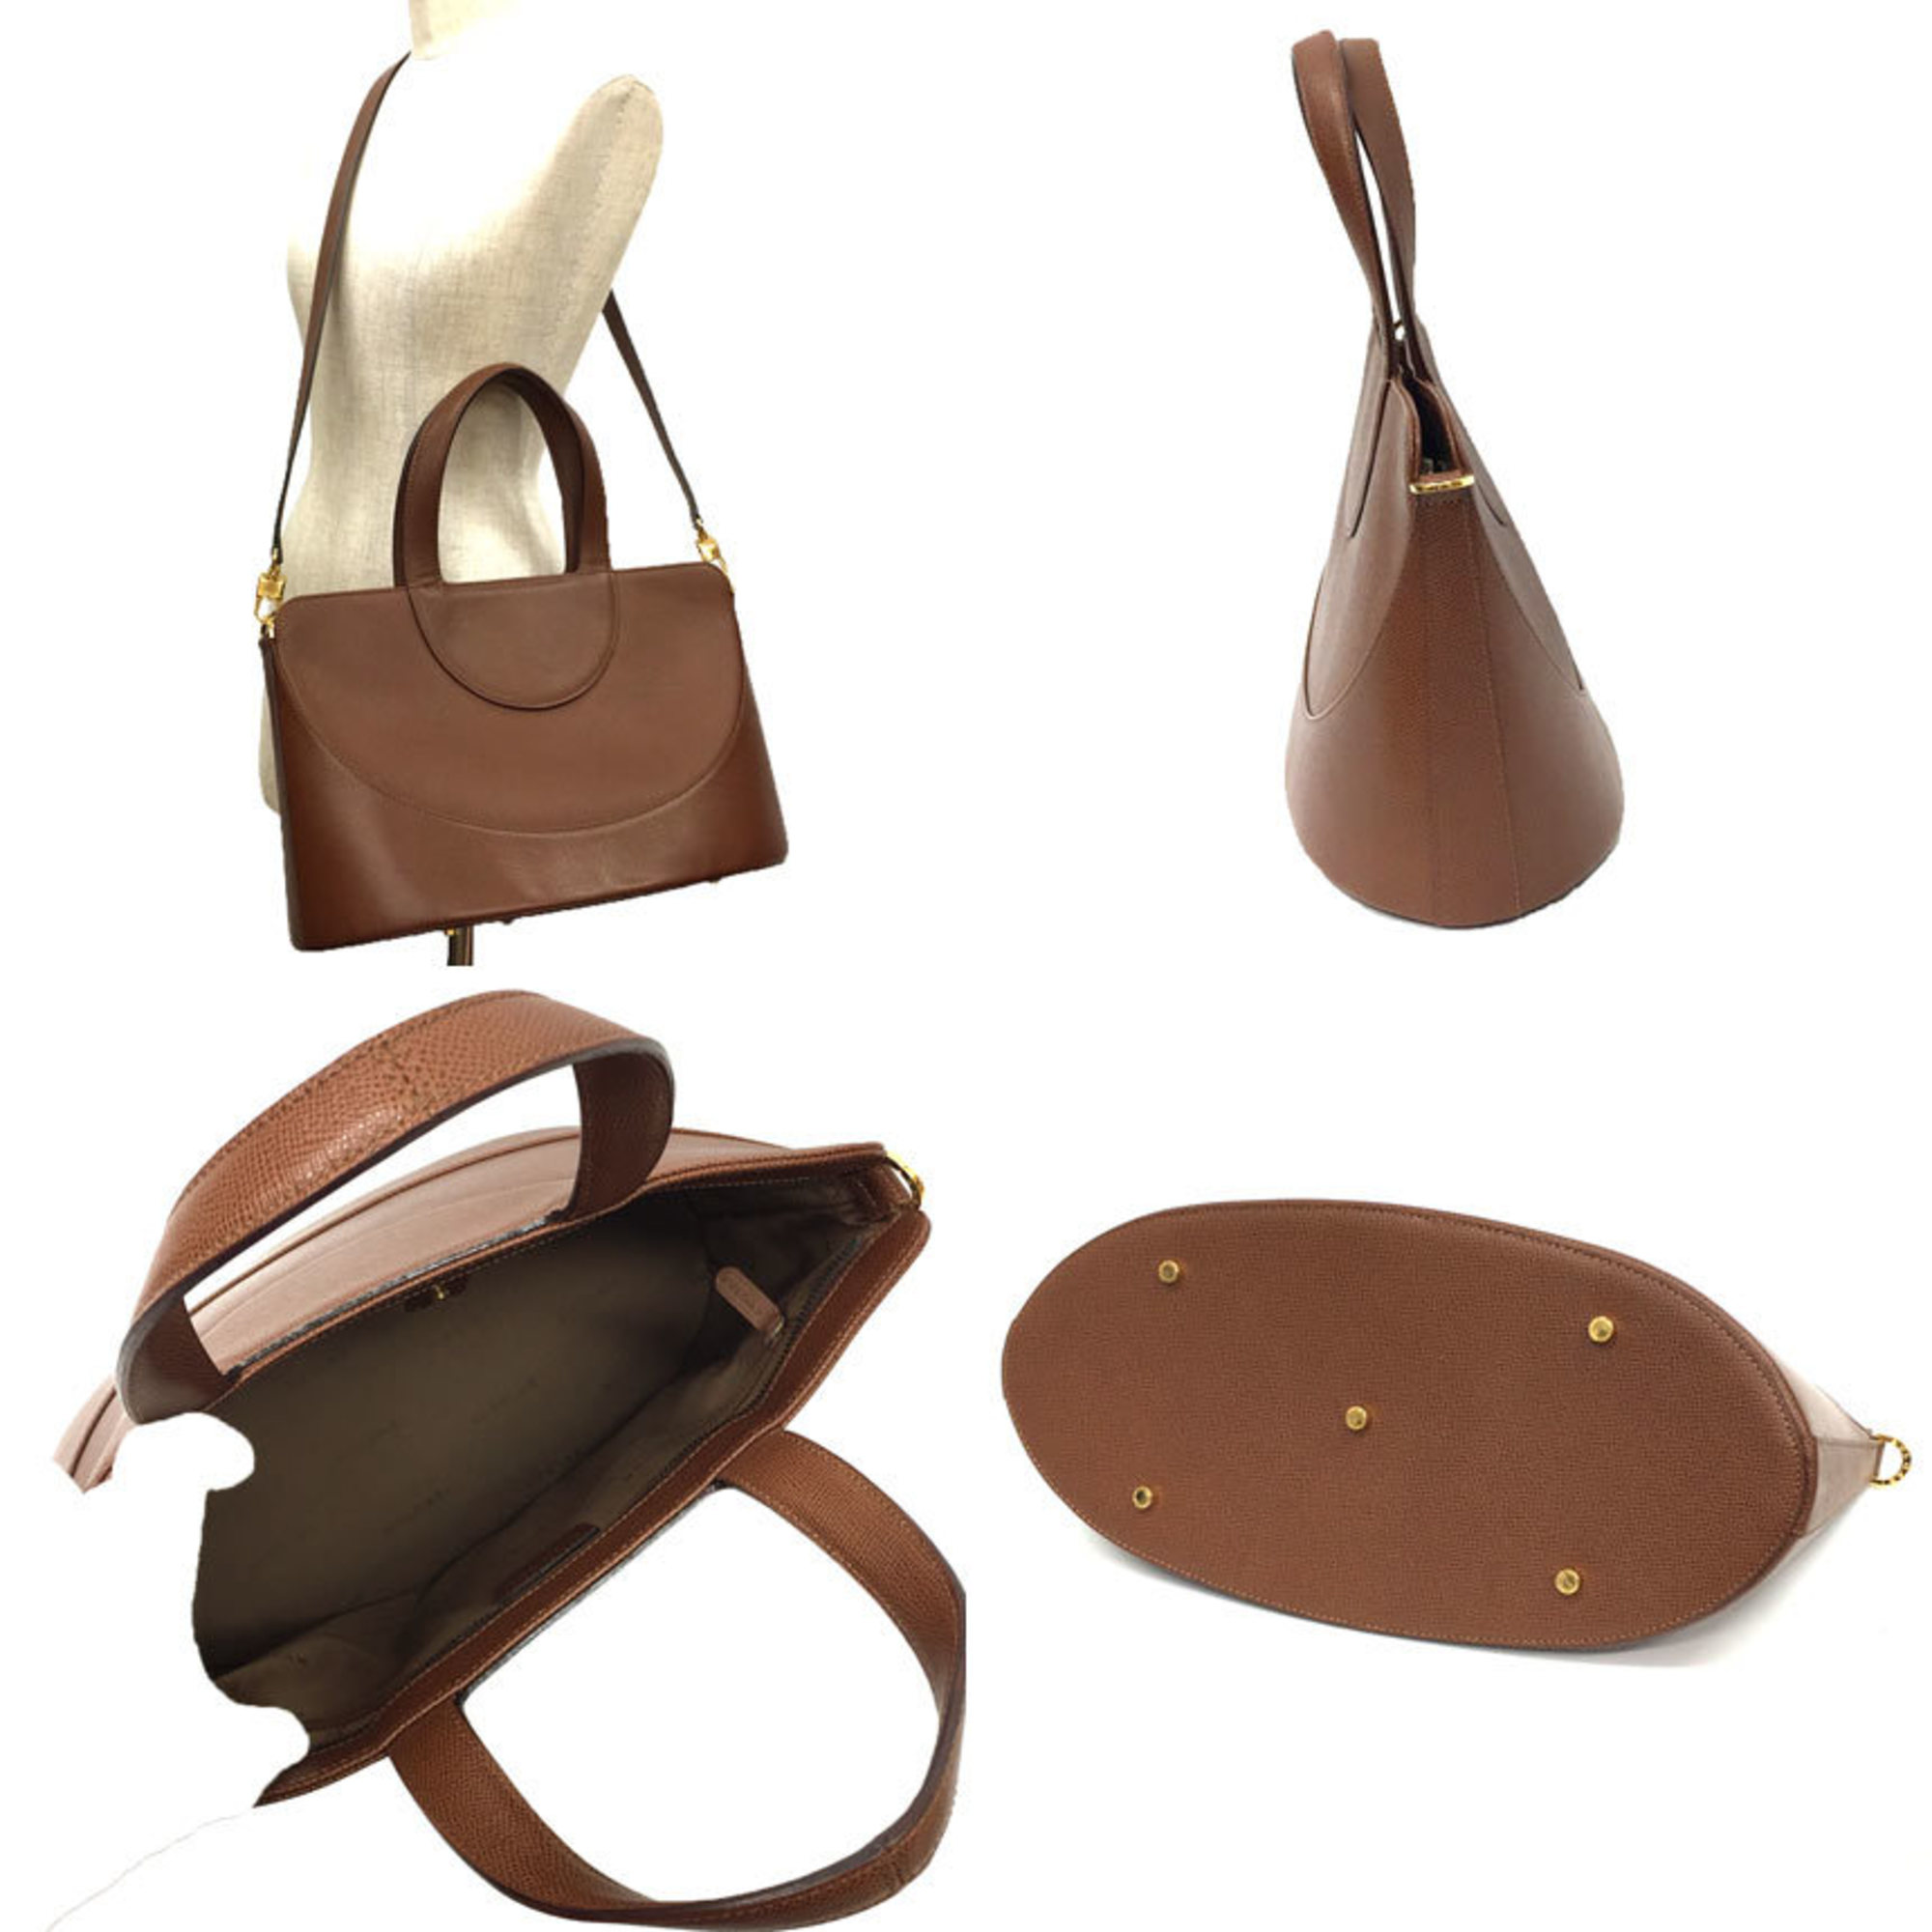 BVLGARI Shoulder Bag 2WAY Tote 21218 Decollete Medium size handbag Grain Leather Brown Women's aq9394